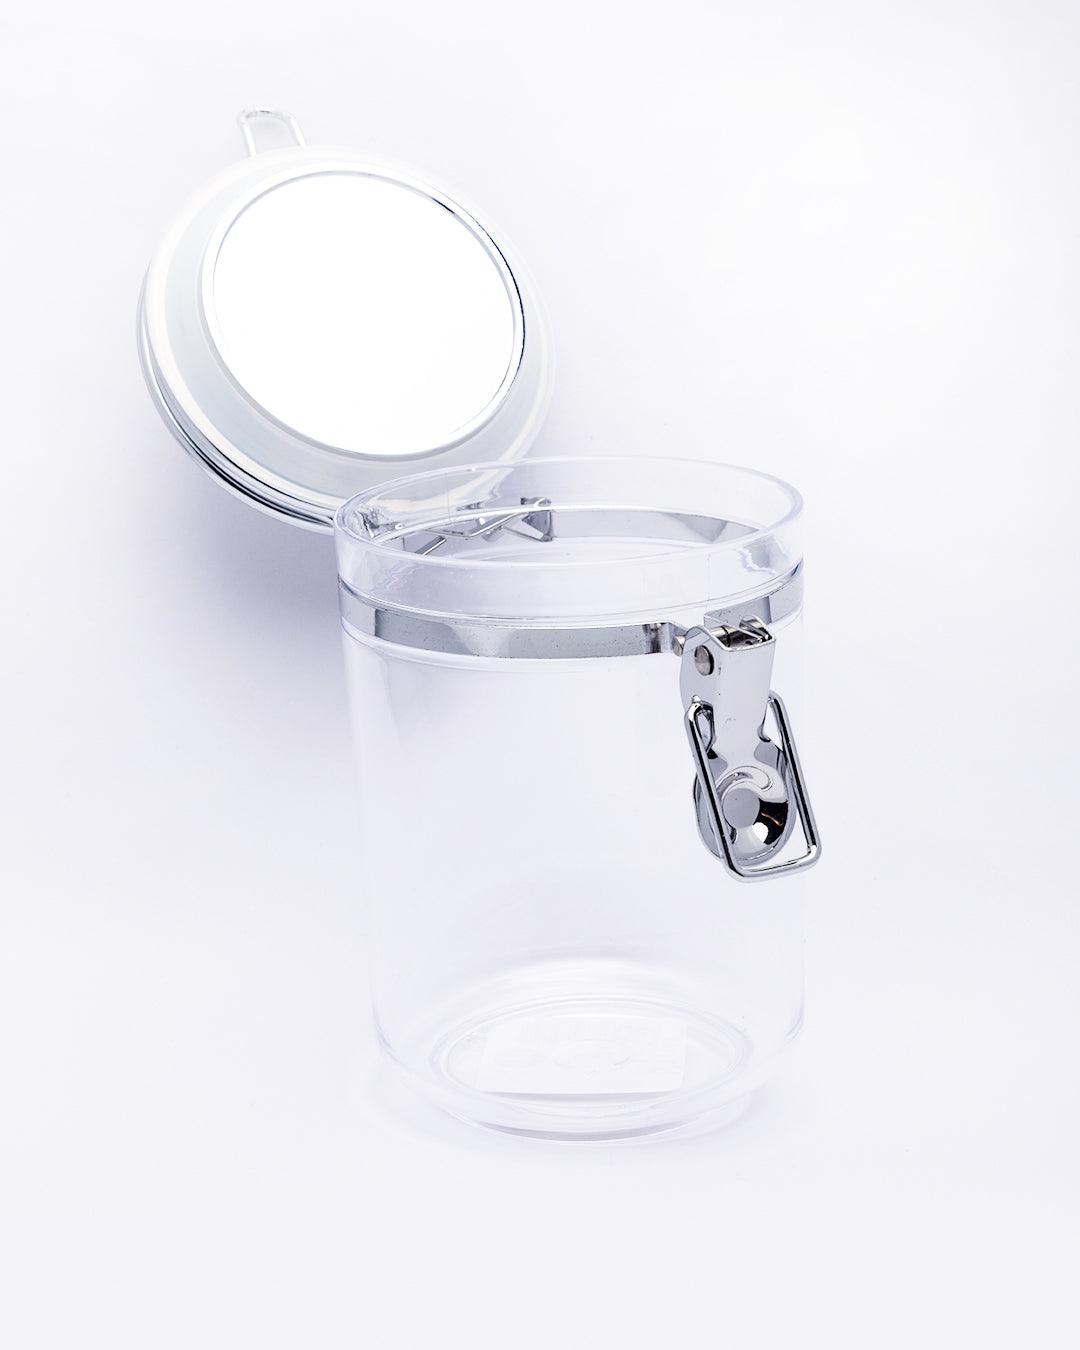 Storage Jar, for Kitchen & Home, Transparent, Plastic, 800 mL - MARKET 99